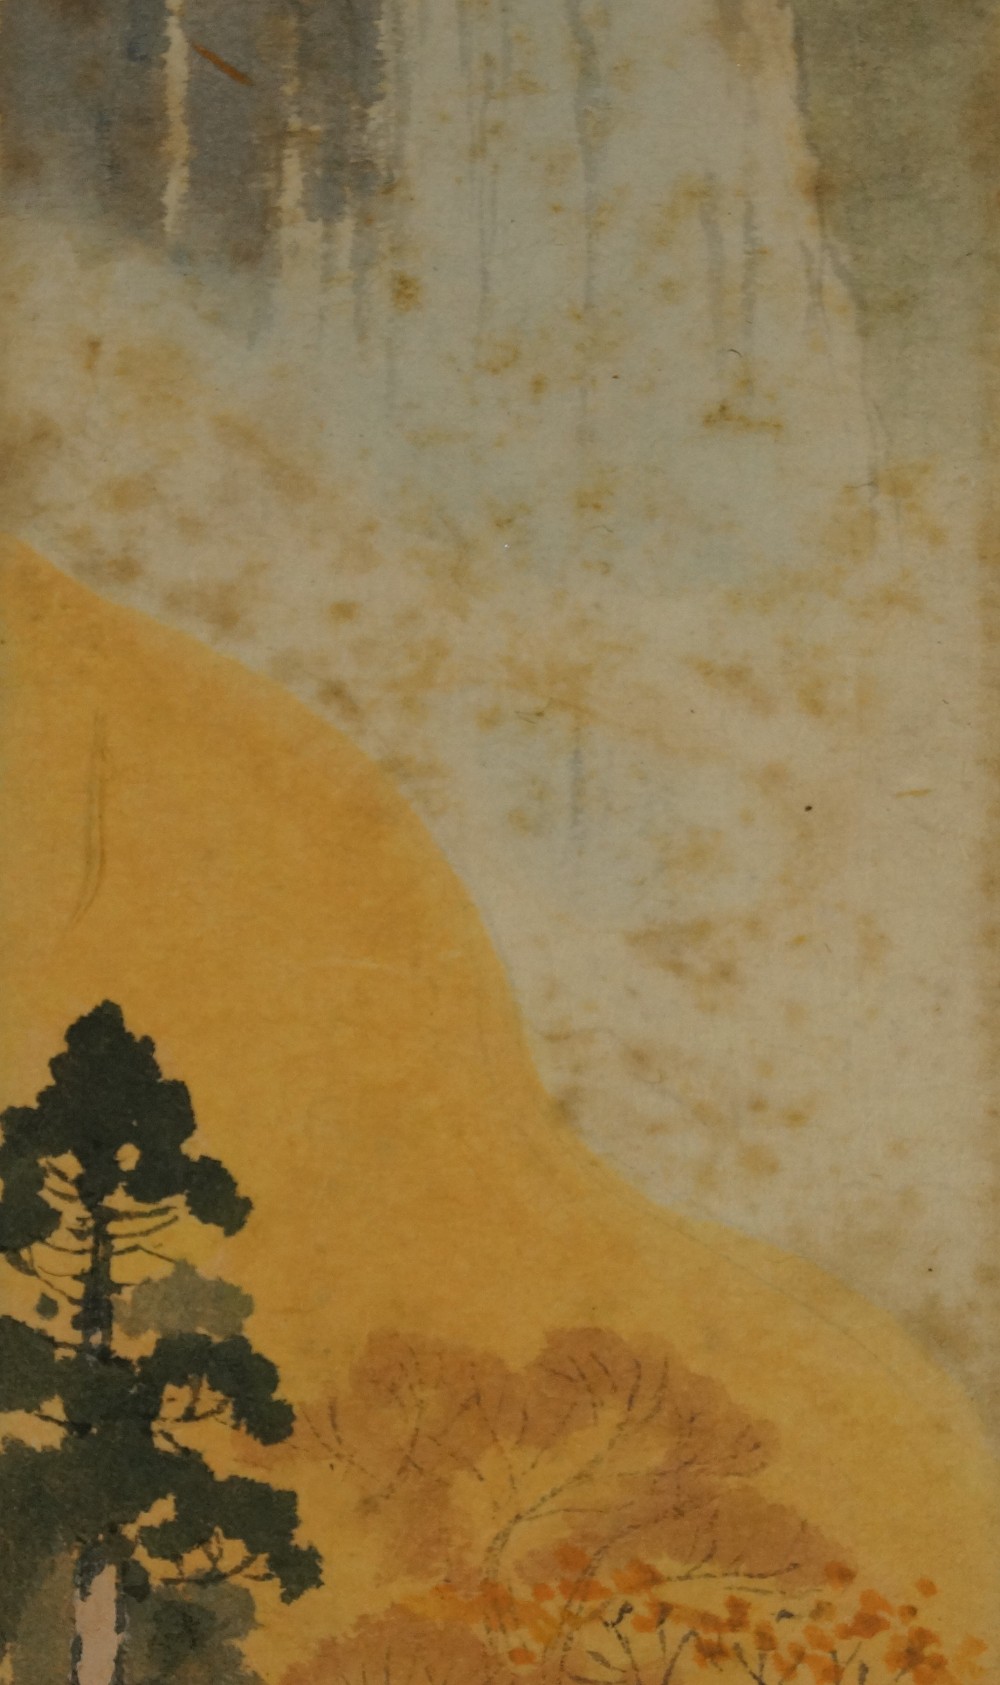 Landschaft - Japanisches Gemälde (Makuri, Honshi)